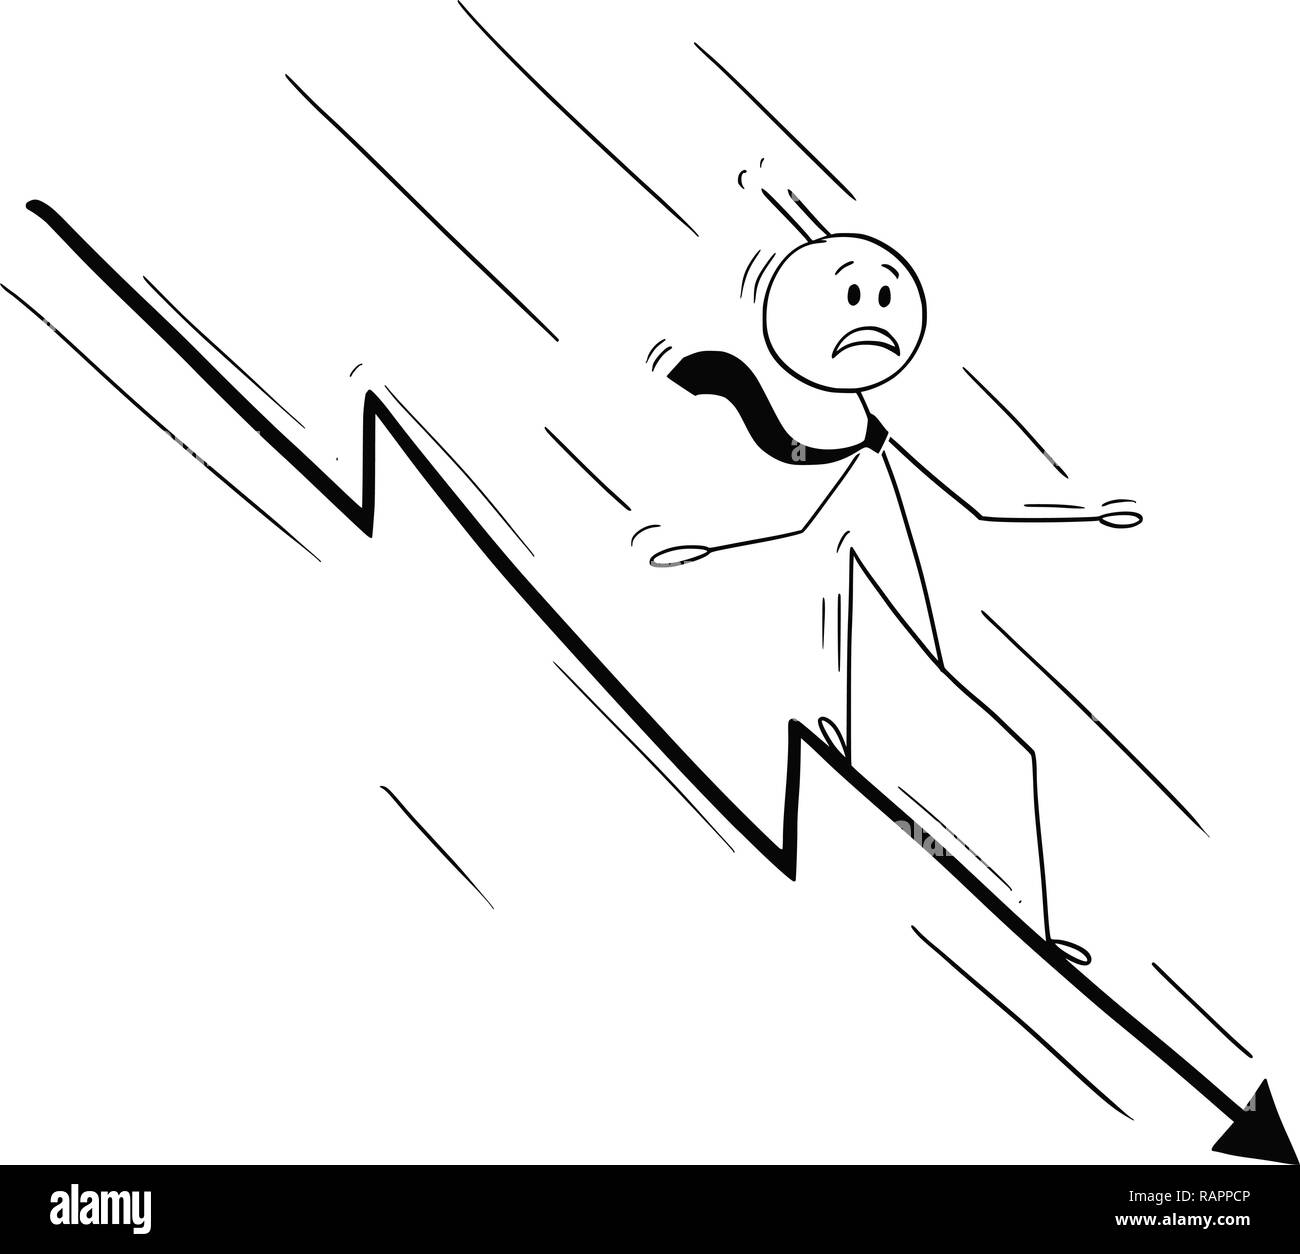 Cartoon of Businessman Riding on Falling or Declining Chart Arrow Stock Vector